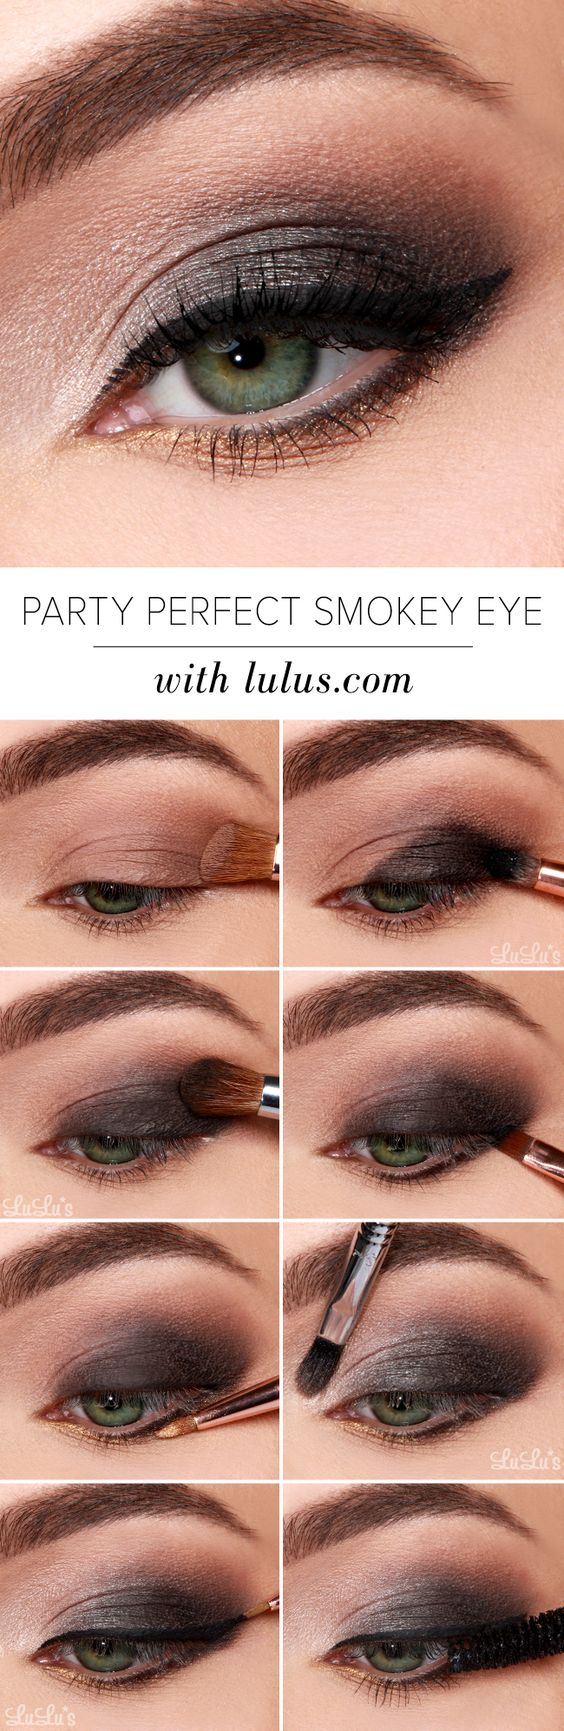 Simple Makeup For Blue Eyes 40 Hottest Smokey Eye Makeup Ideas 2019 Smokey Eye Tutorials For